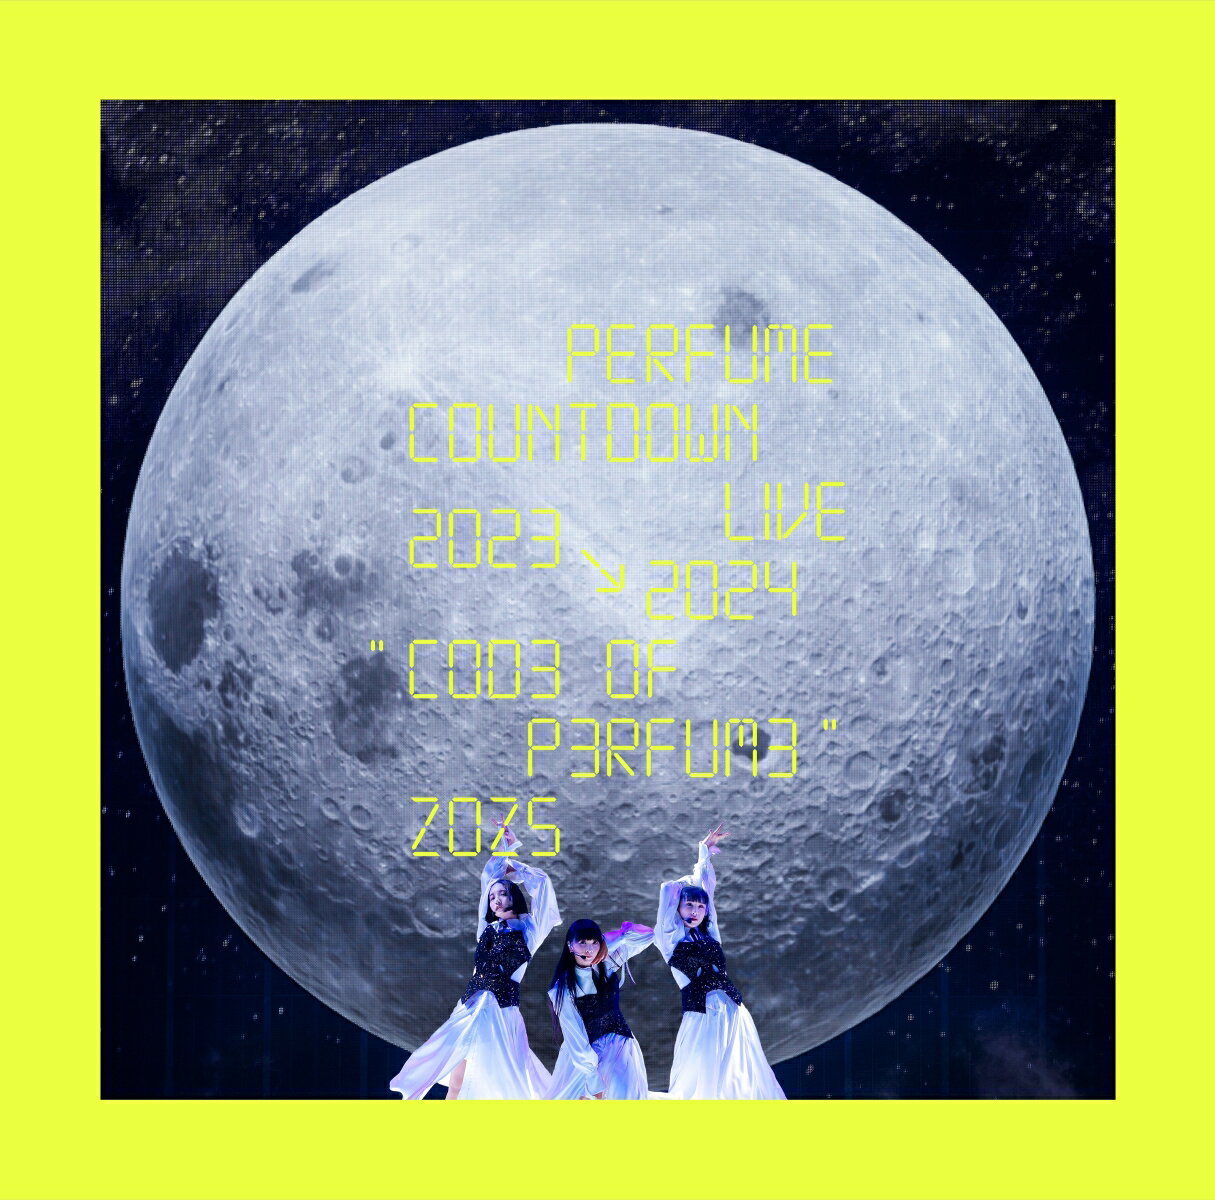 Perfume Countdown Live 2023→2024 “COD3 OF P3RFUM3” ZOZ5(通常盤DVD) [ Perfume ]